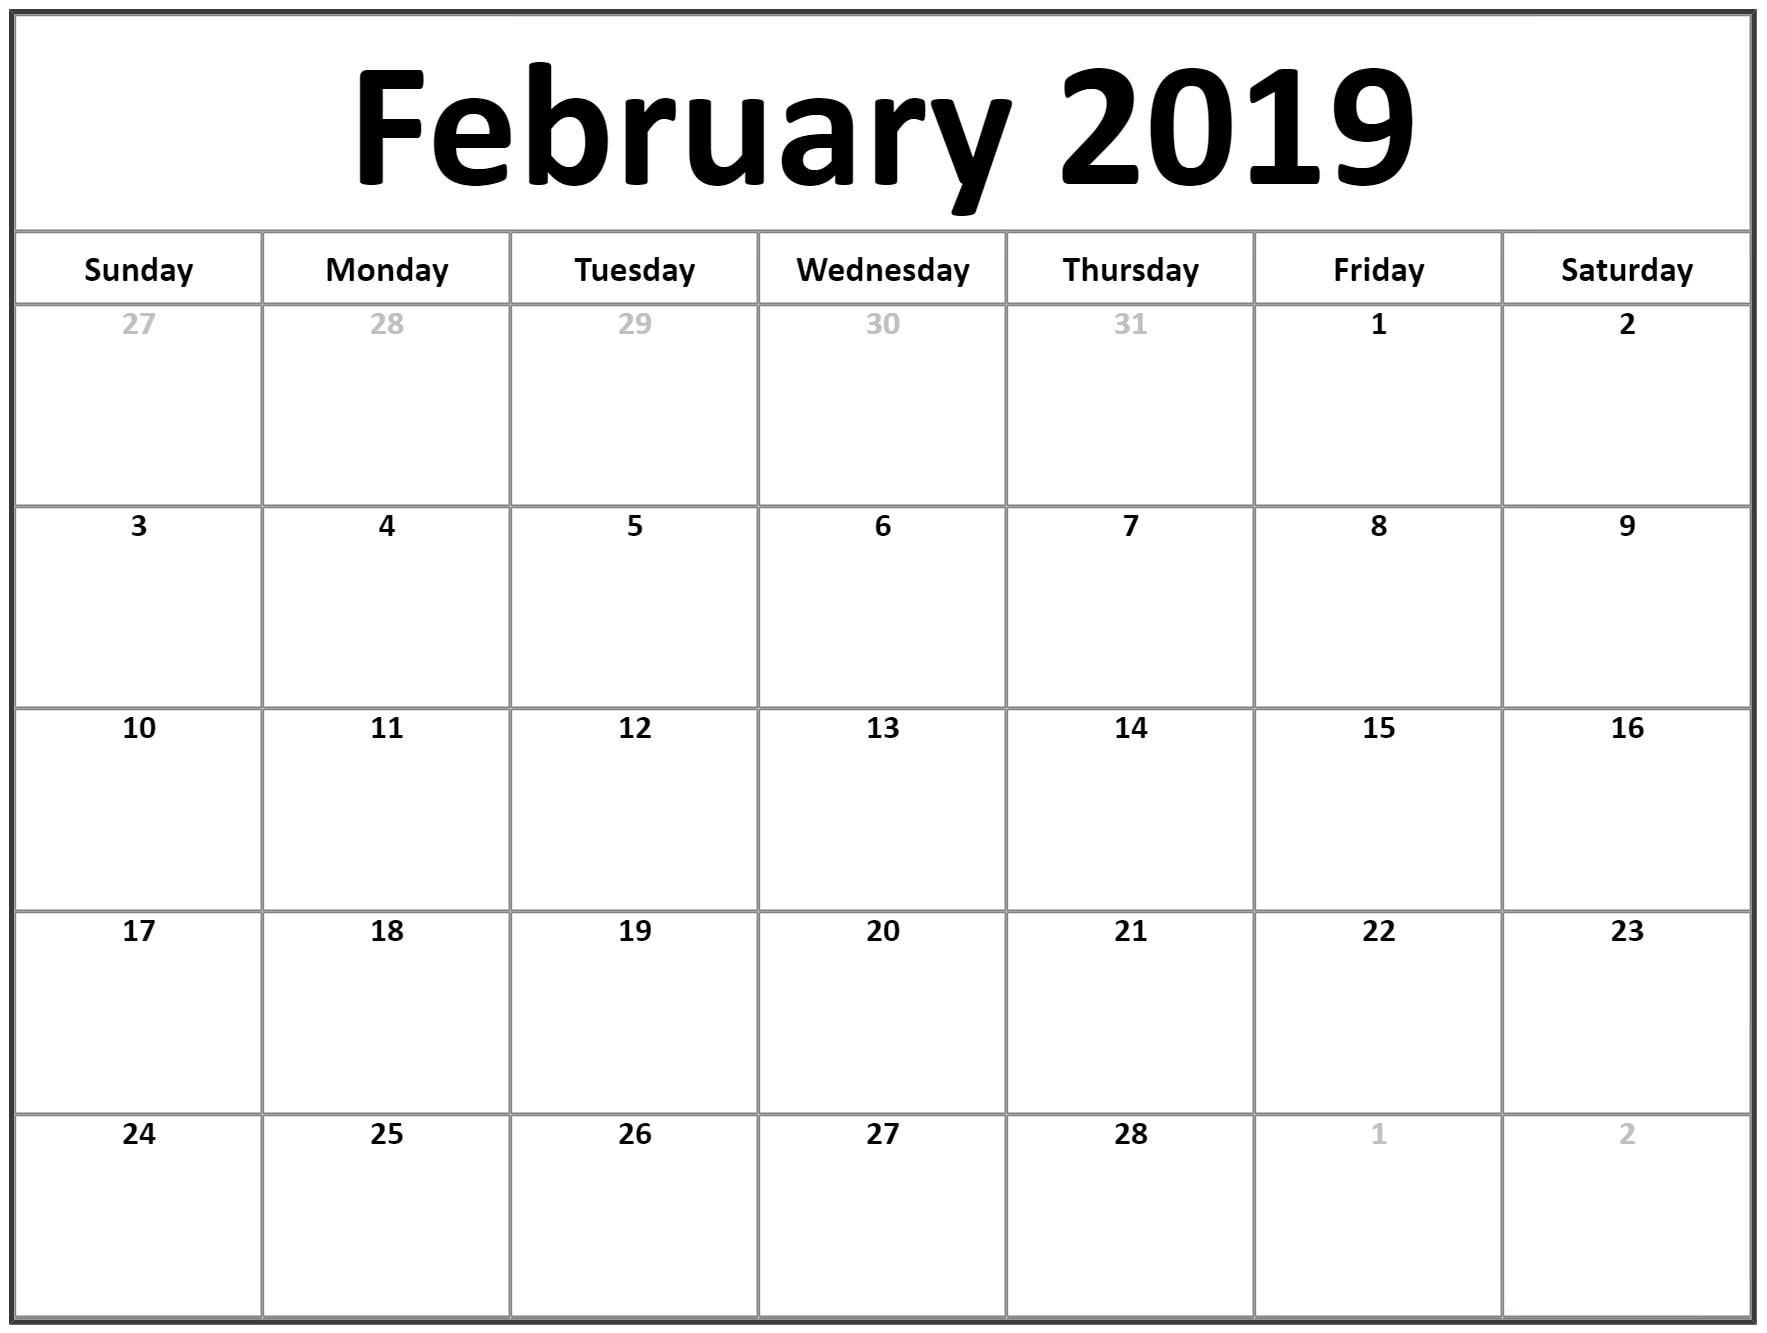 February Calendar 2019 For Office | February Calendar 2019